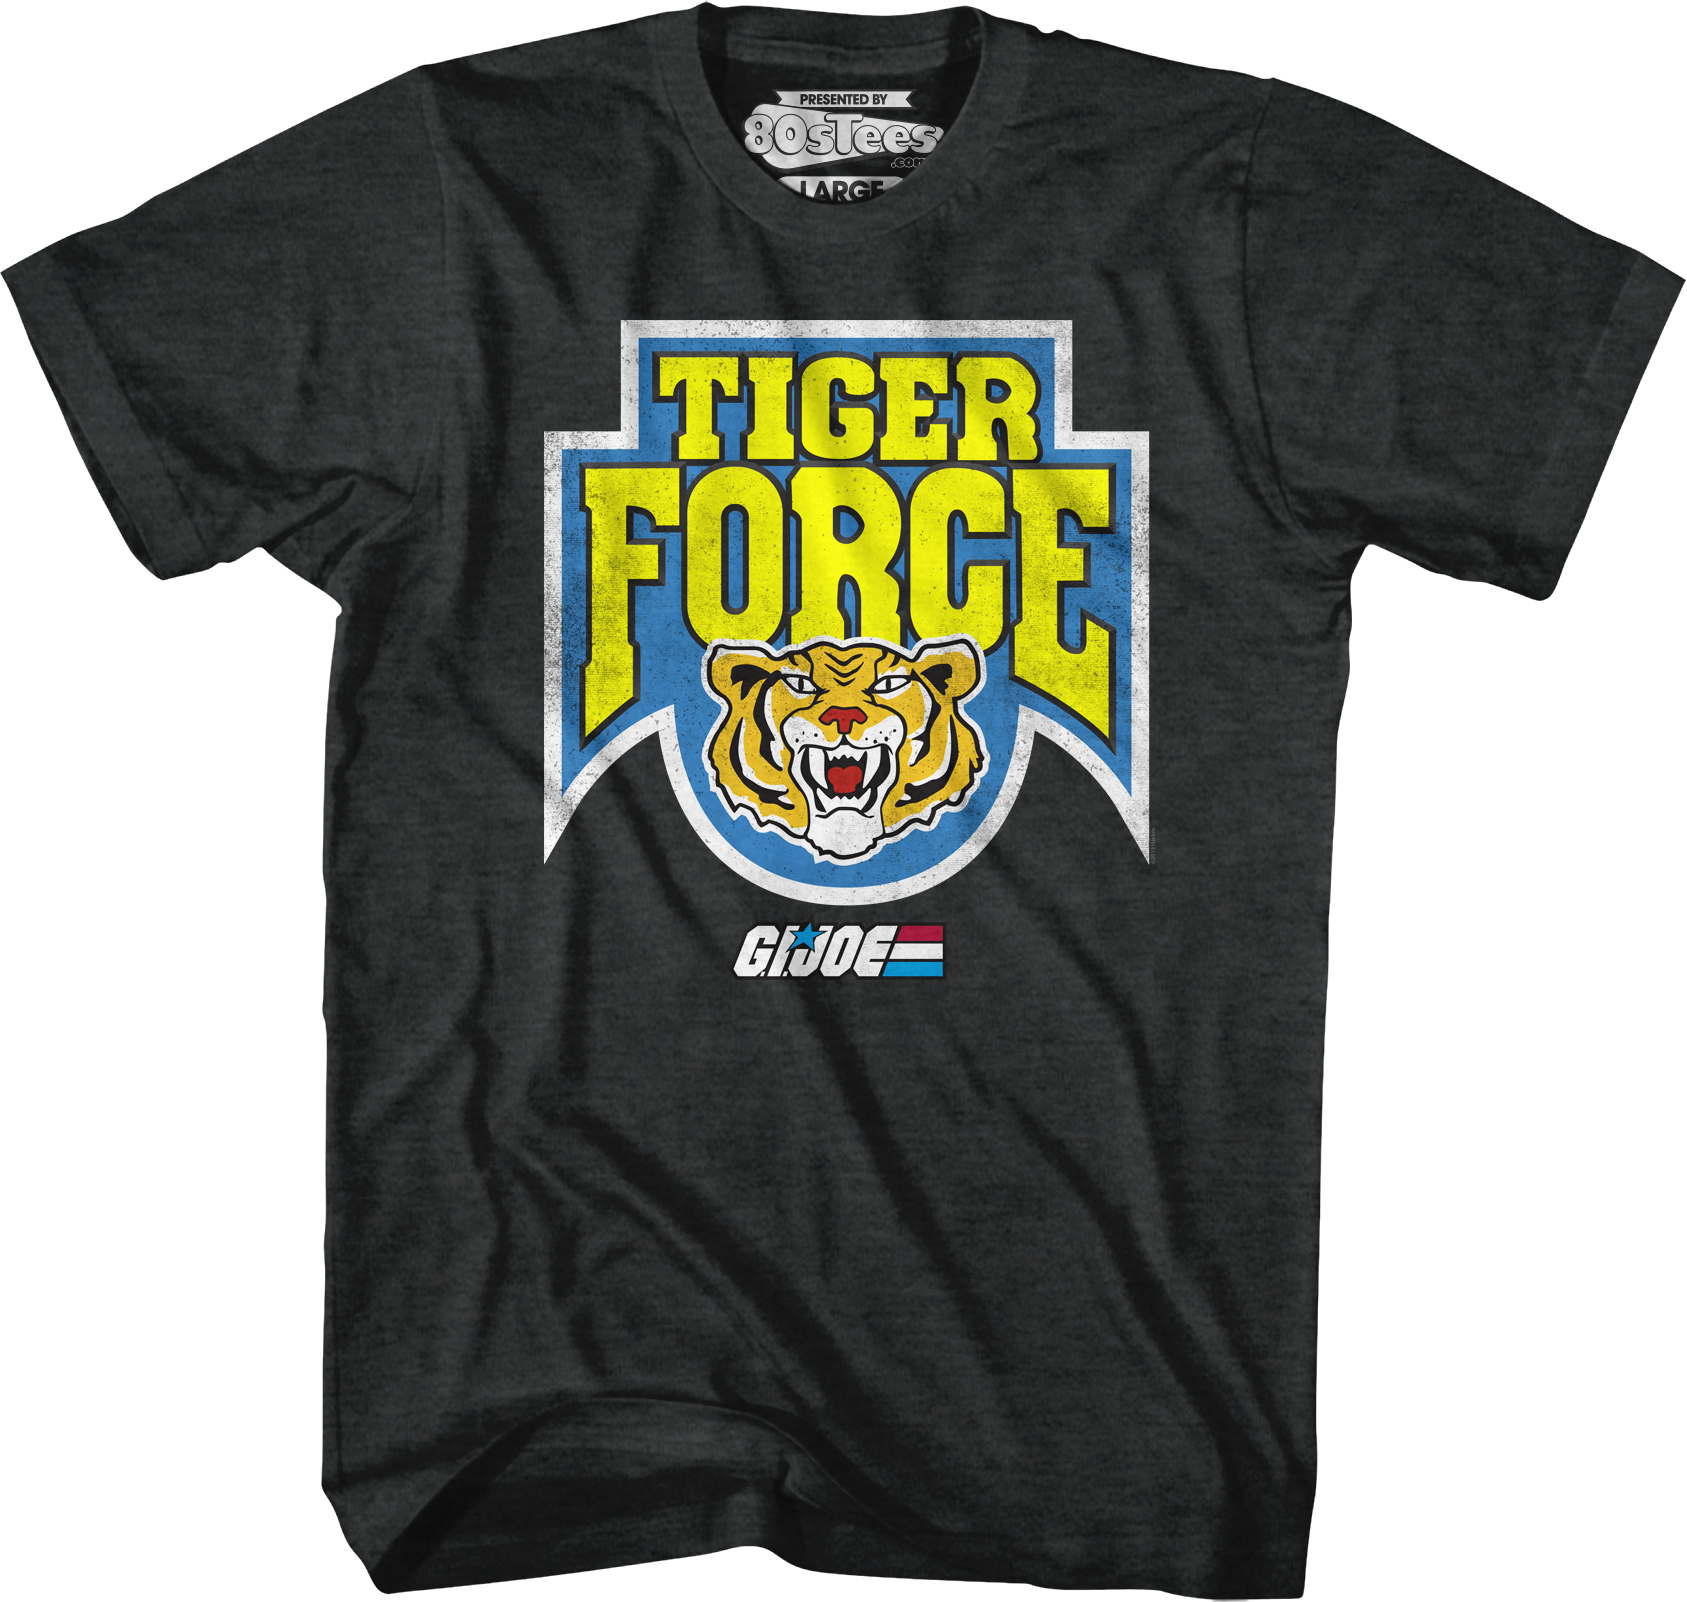 Tiger Force GI Joe T-Shirt